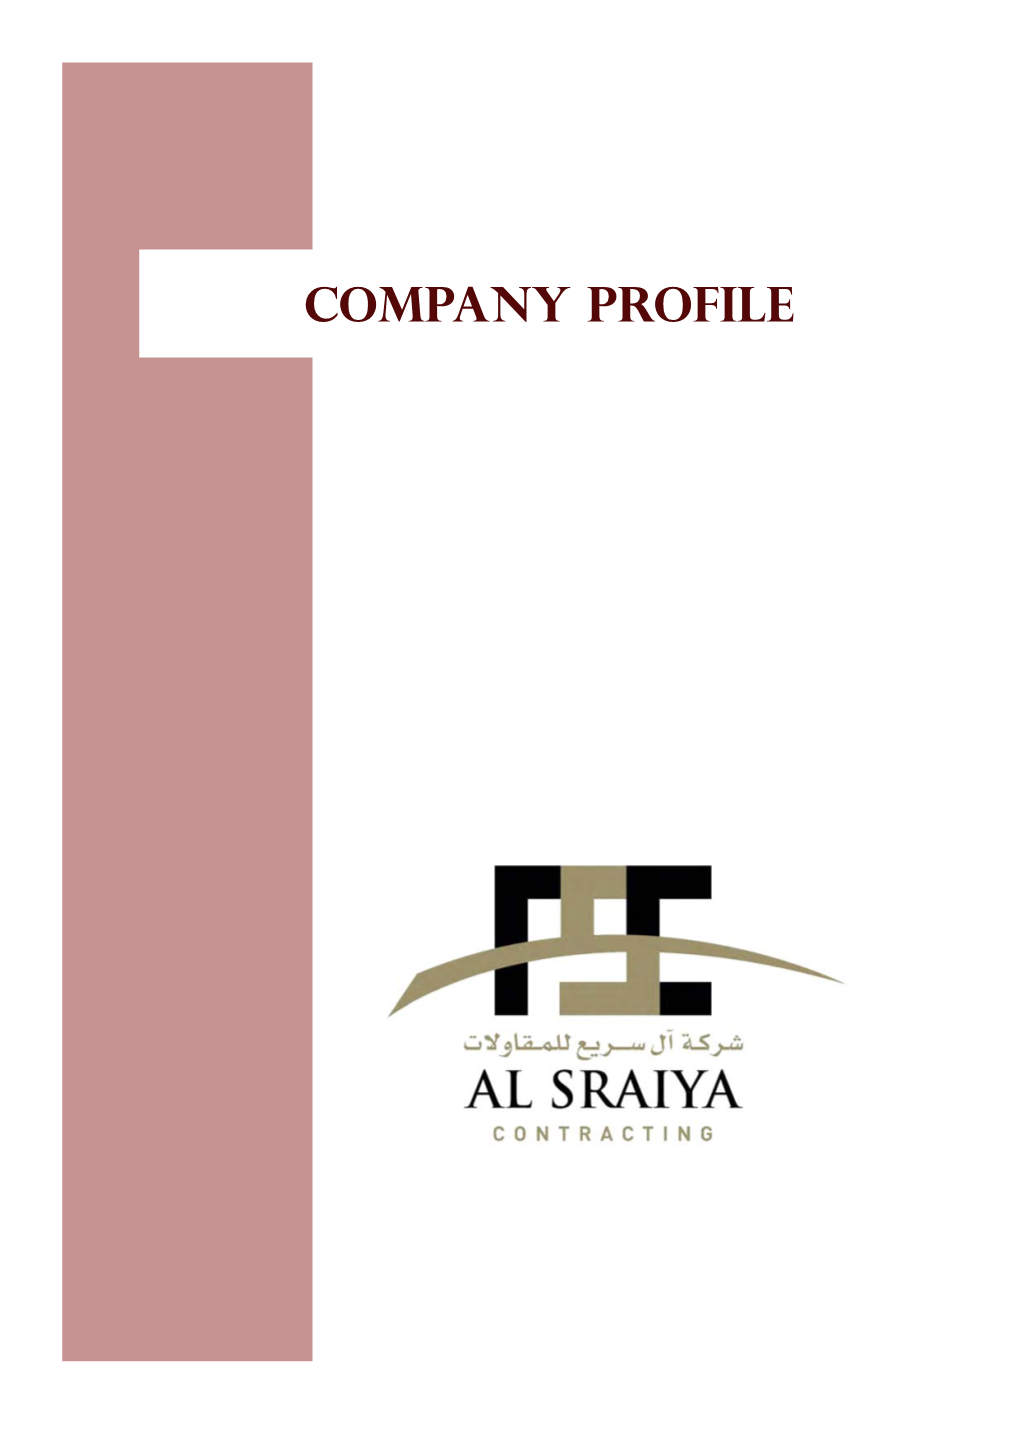 Company Profile Introduction